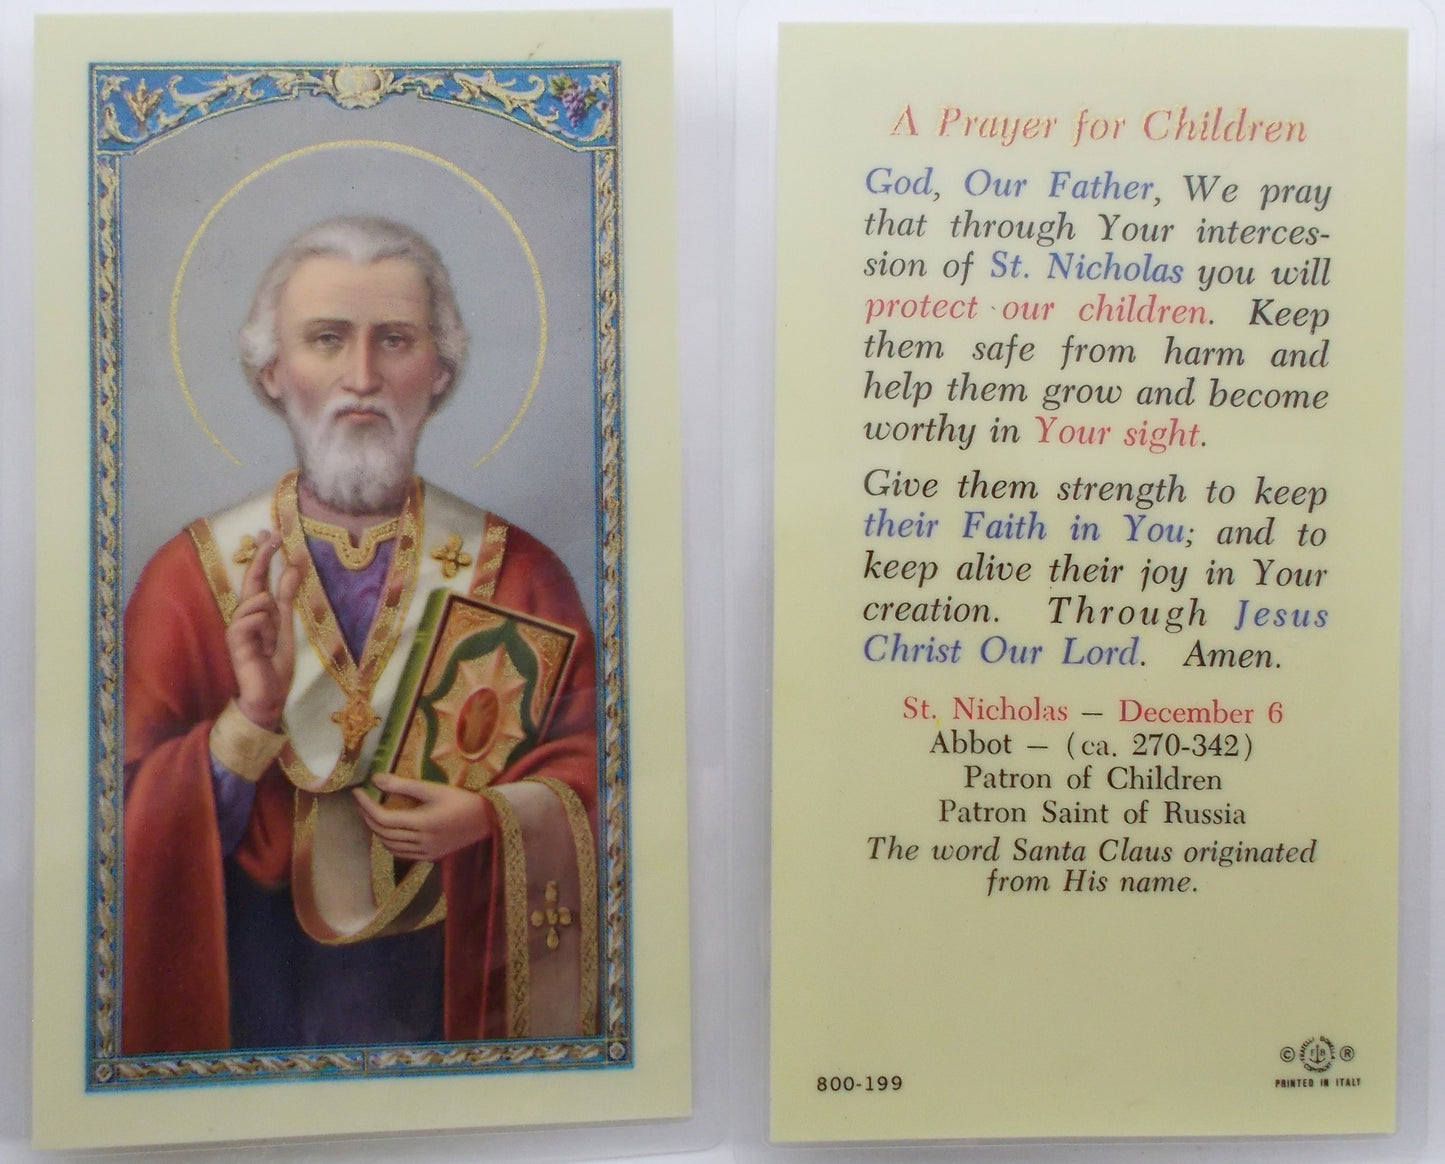 Laminated - St. Nicholas - A Prayer for Children